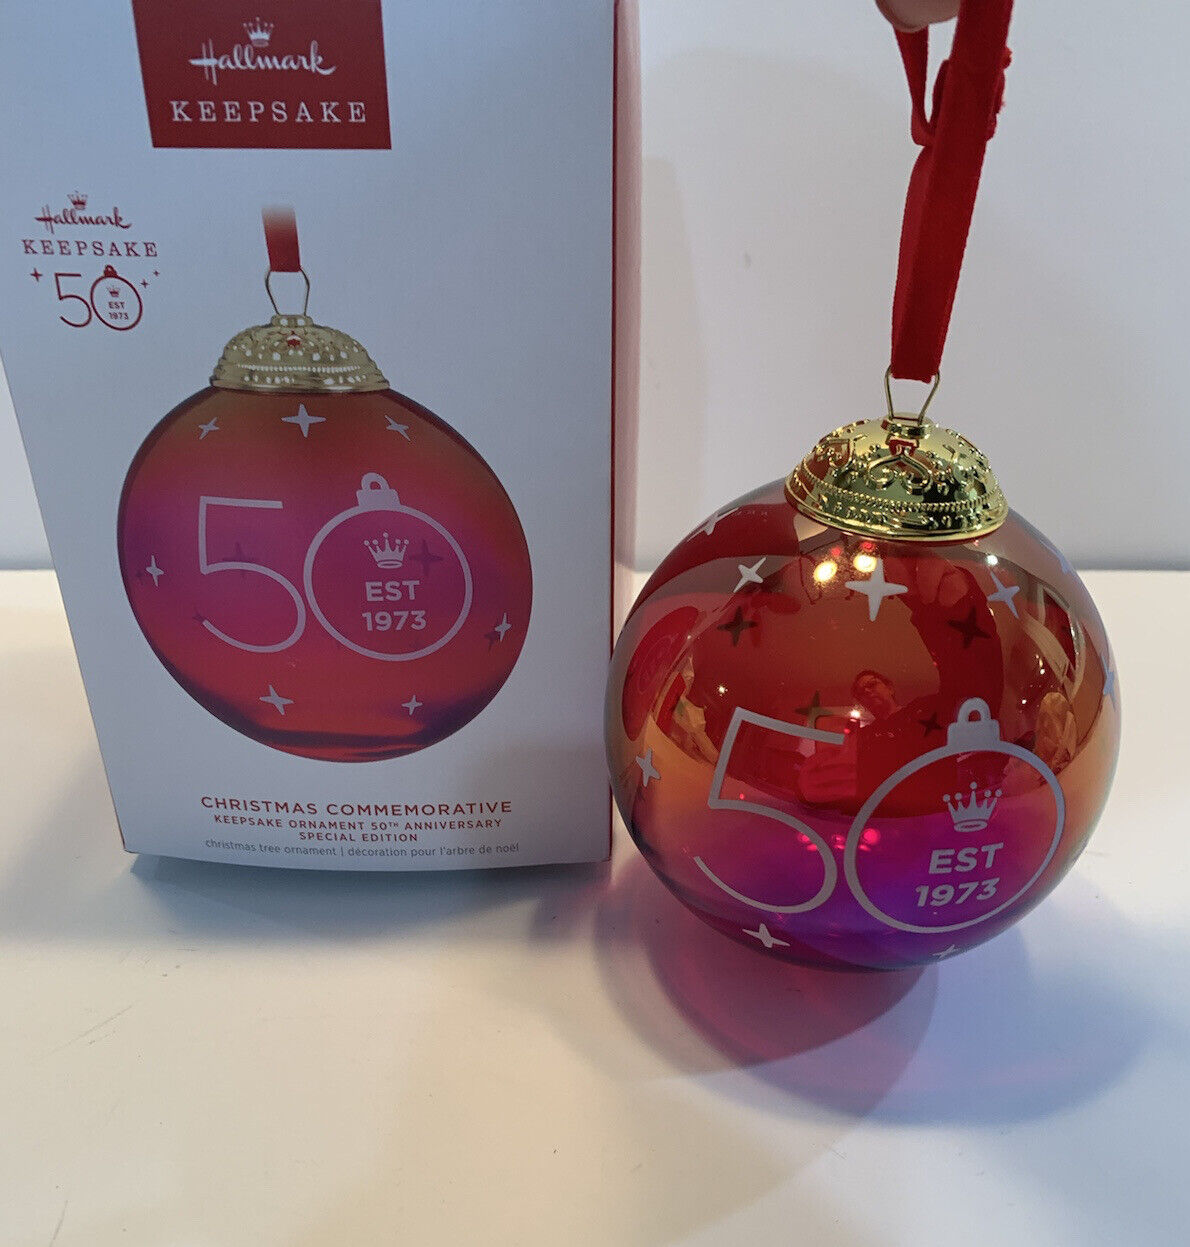 2023 Hallmark Christmas Commemorative 50th Anniversary Special Edition Ornament